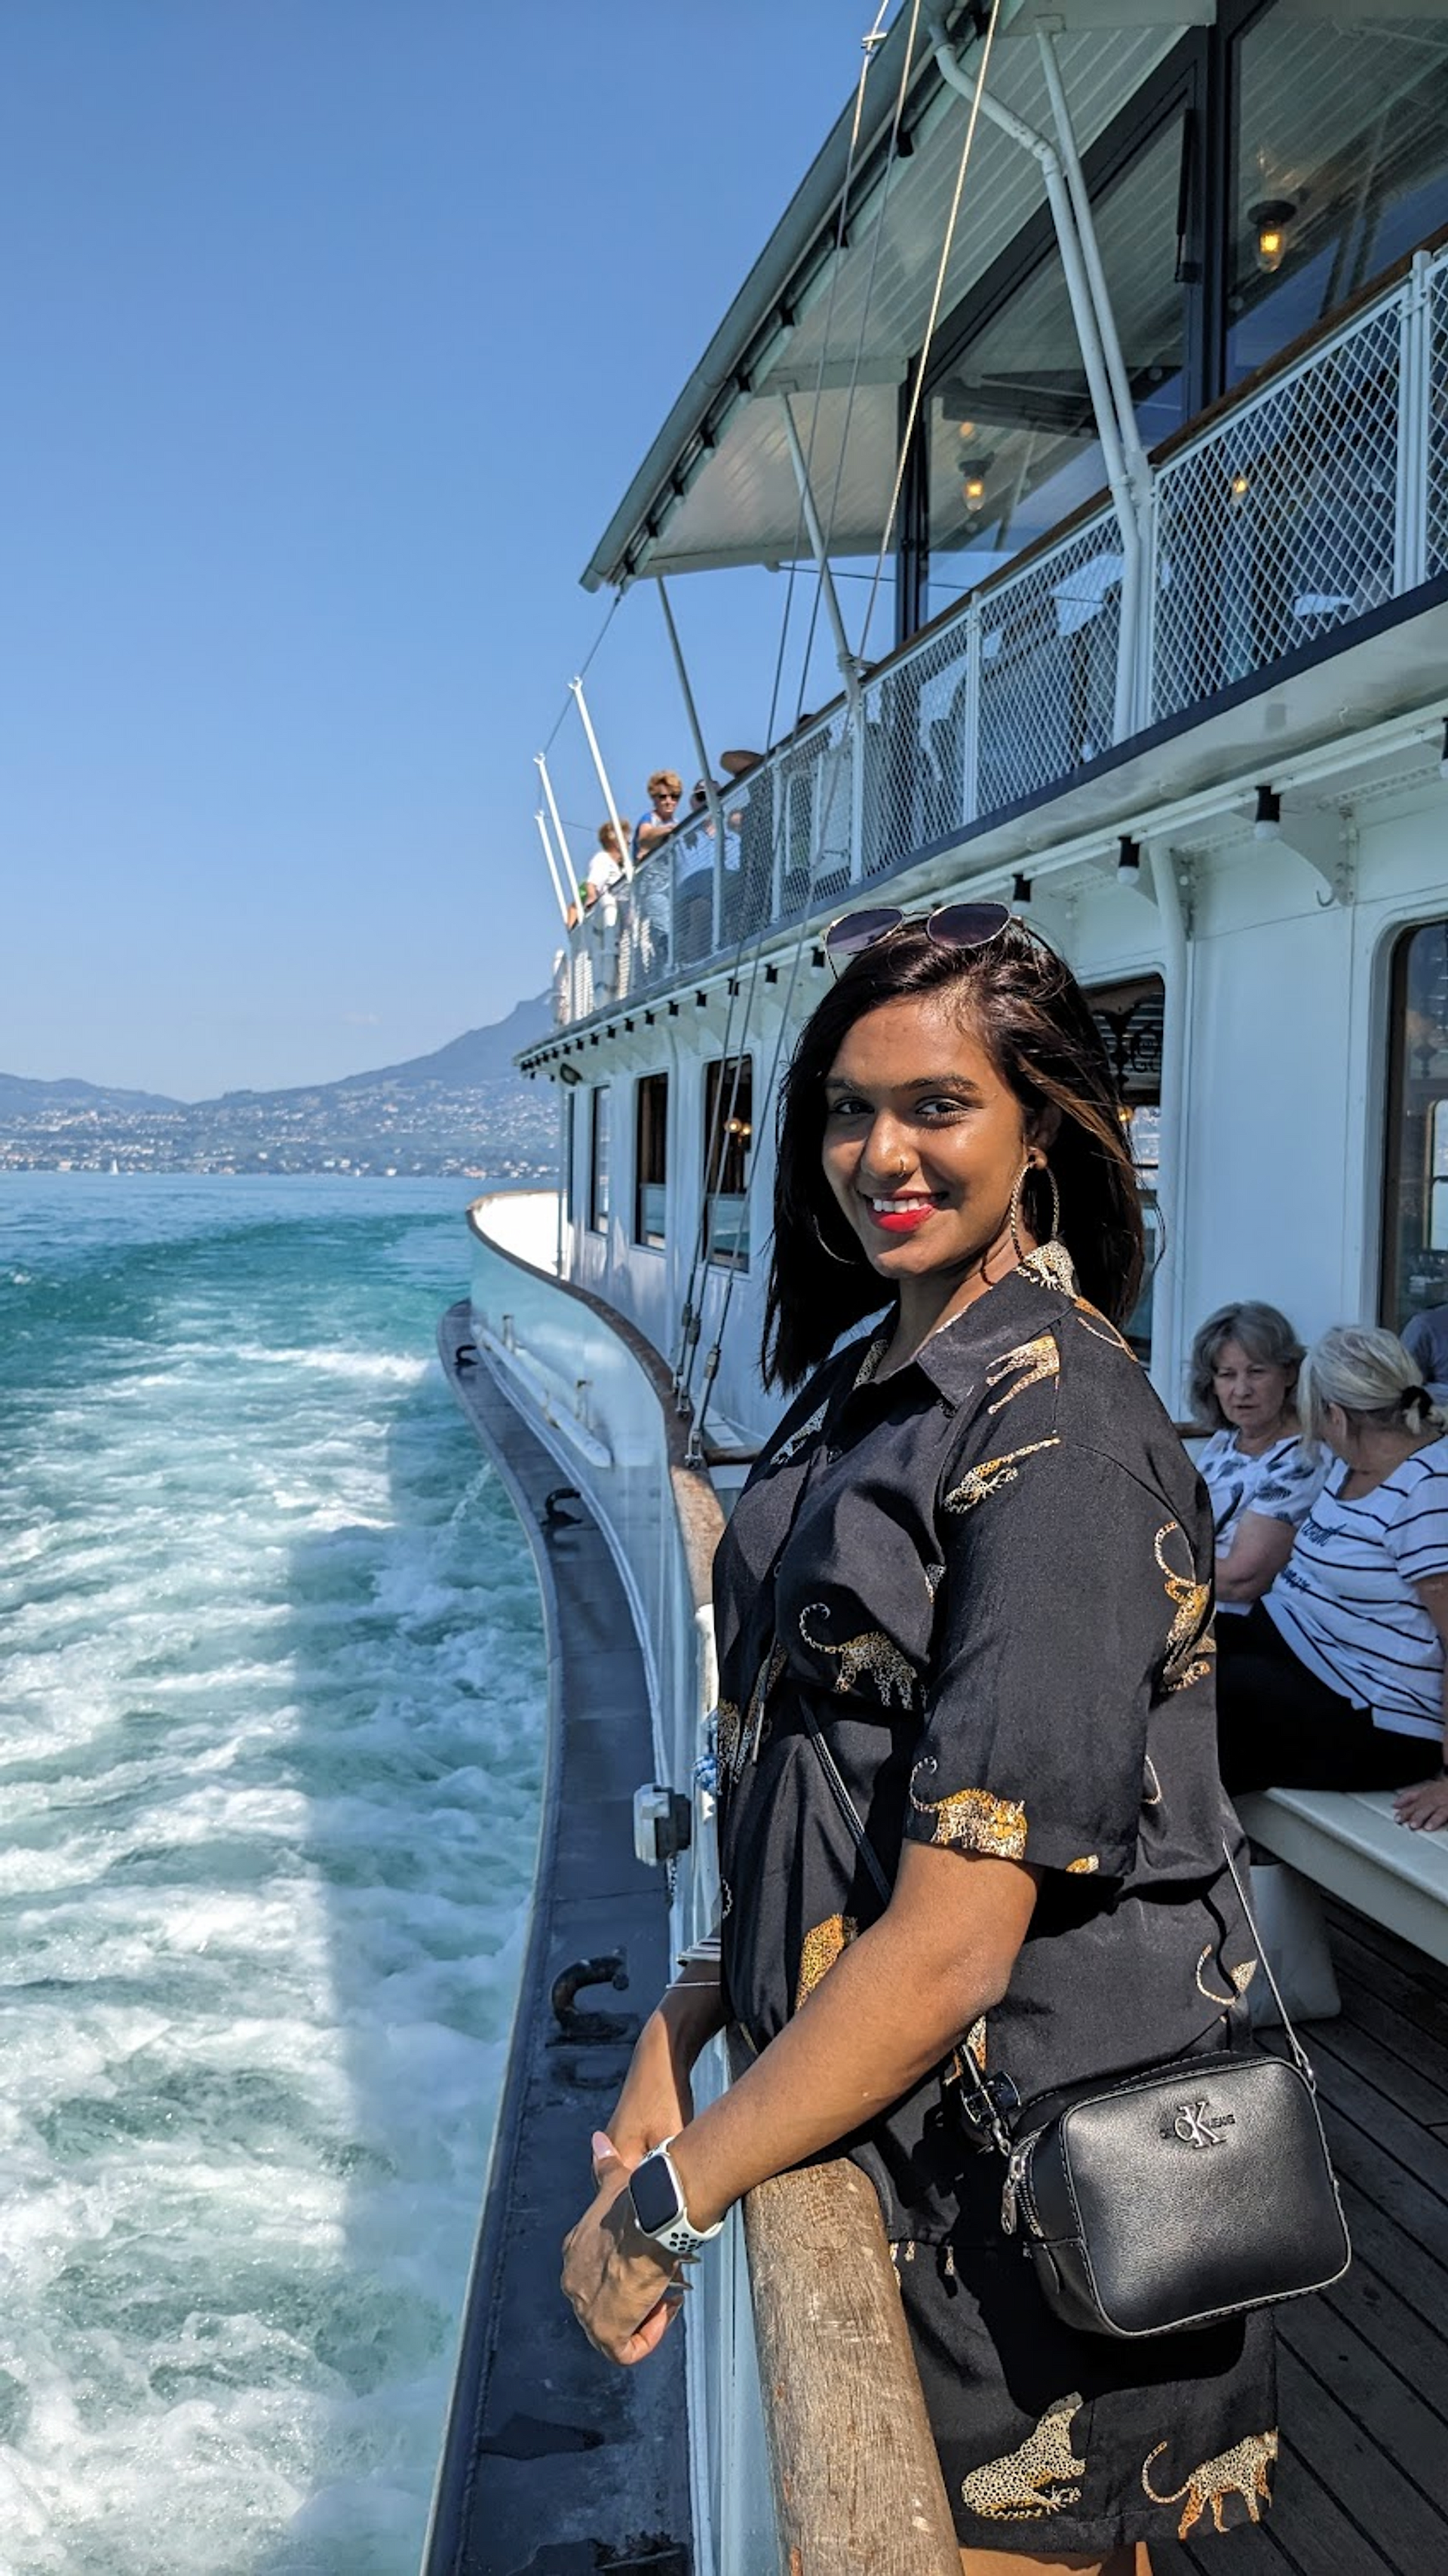 Dana posing on the ship as we cruise on Lake Geneva